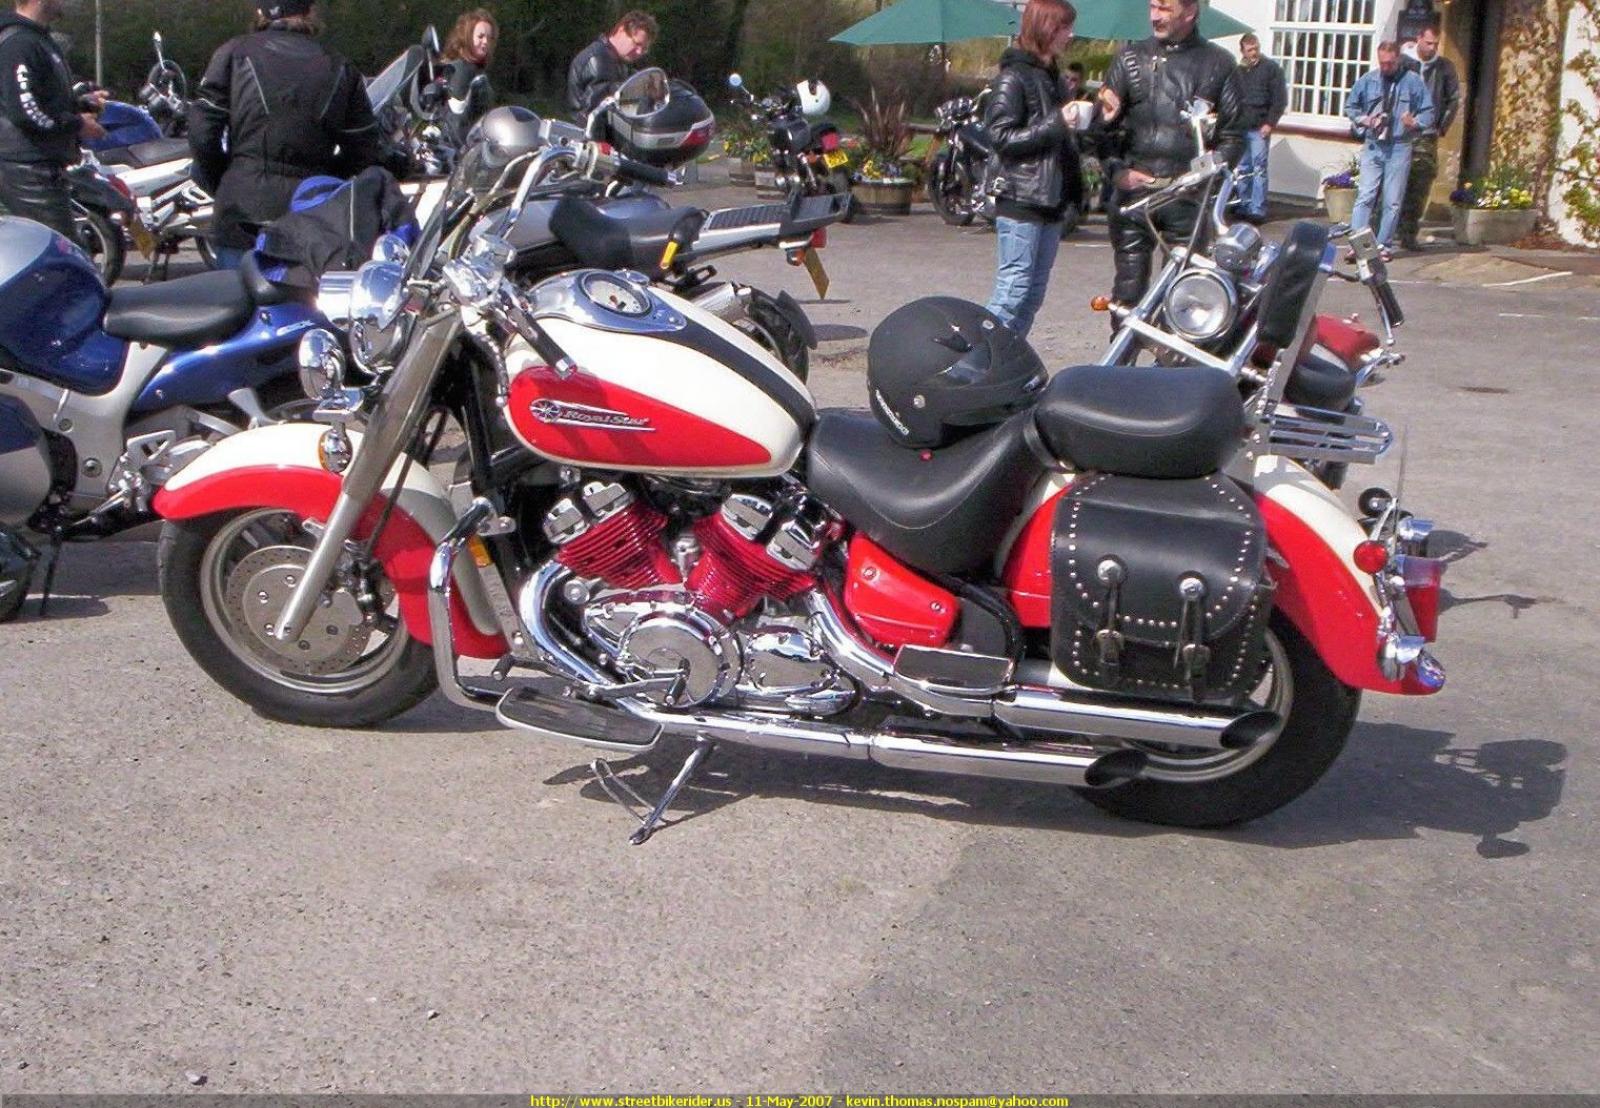 Обзор мотоцикла yamaha xvz1300a royal star